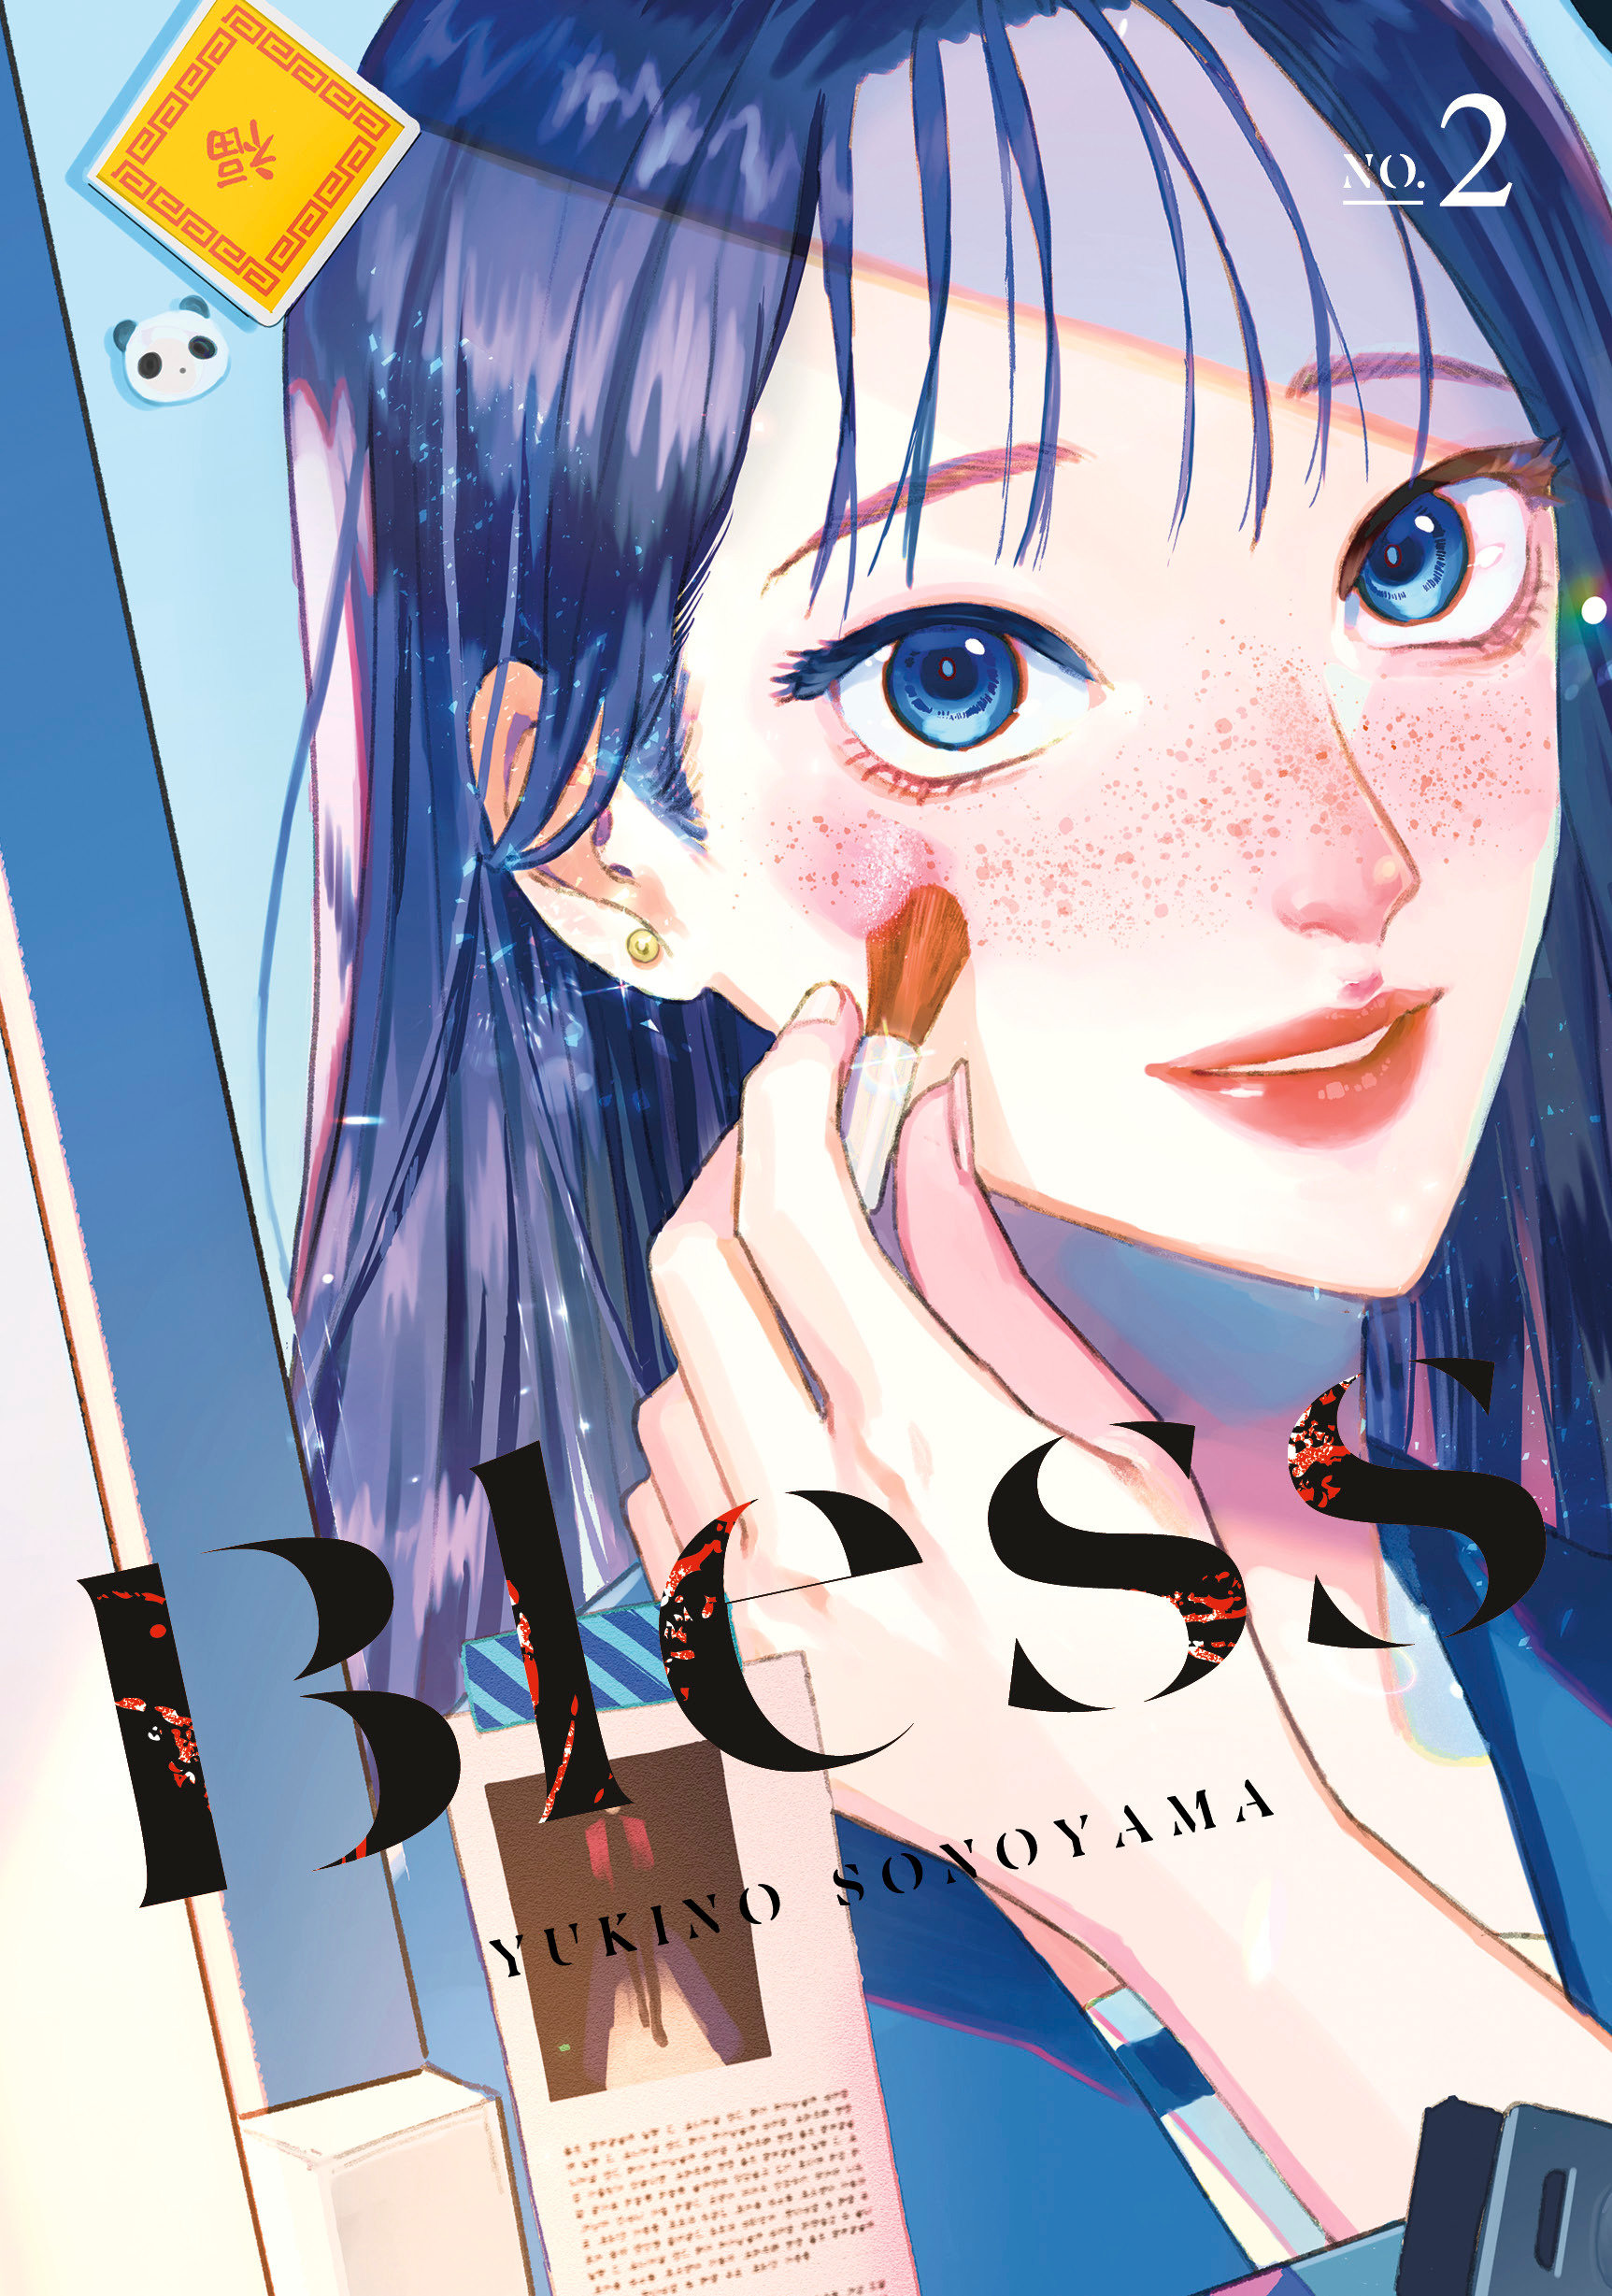 Bless Manga Volume 2